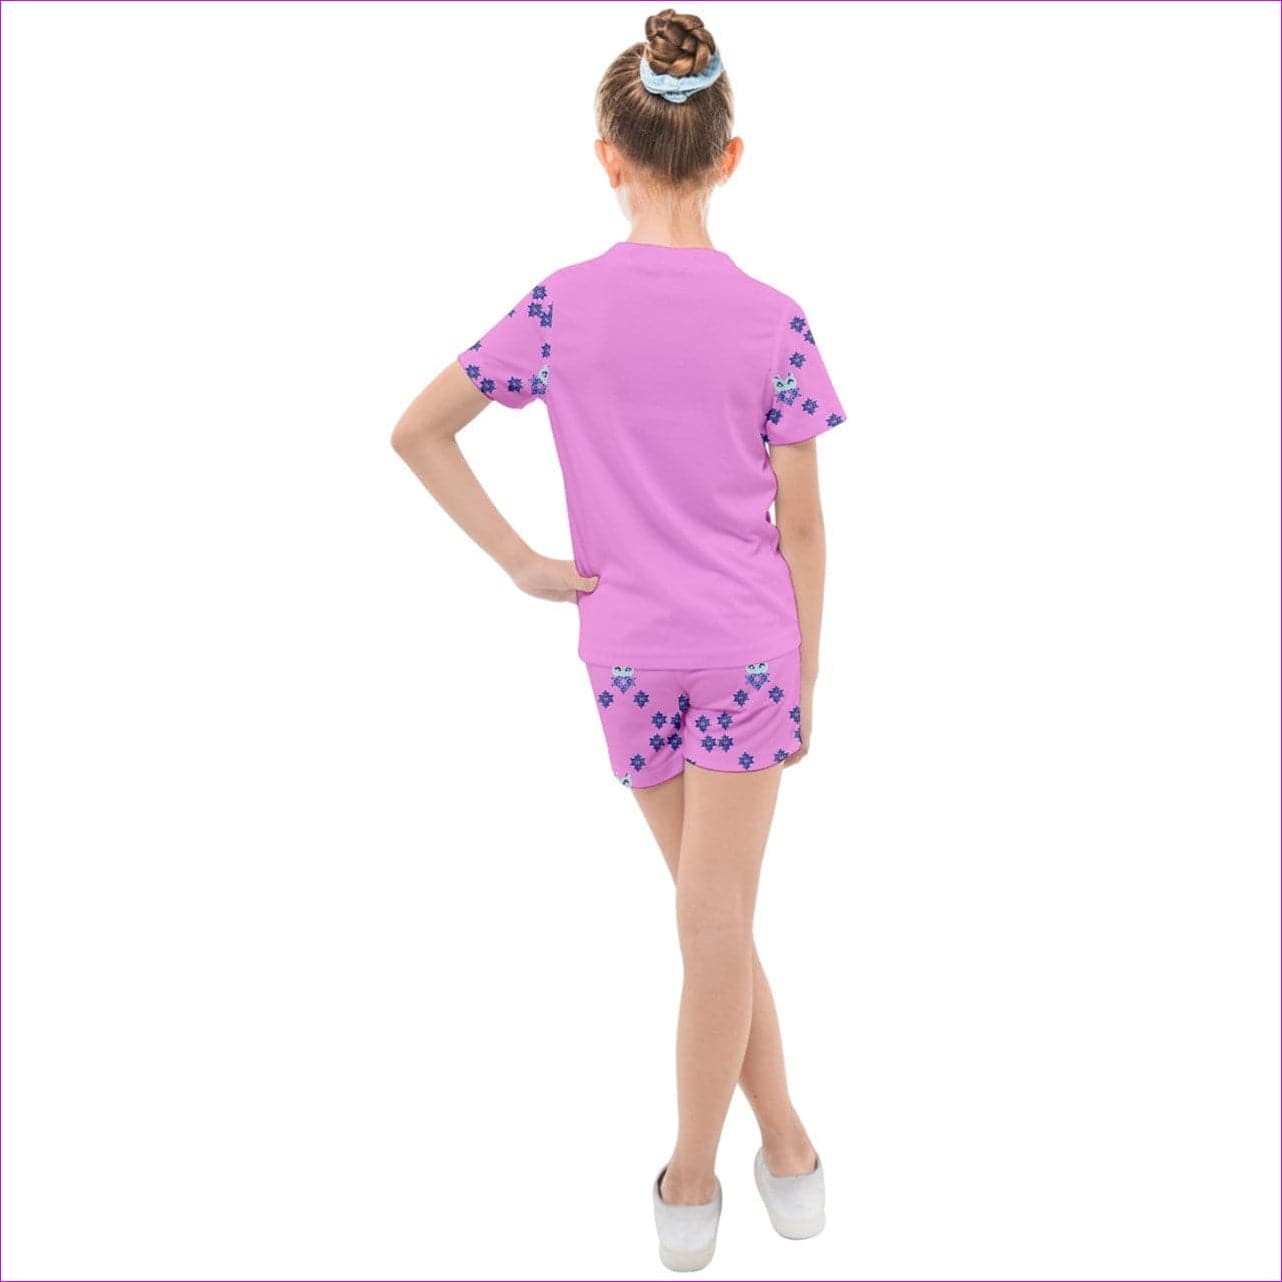 Owl-Some Kids Pink Mesh Tee and Shorts Set - shorts-clothing-sets at TFC&H Co.